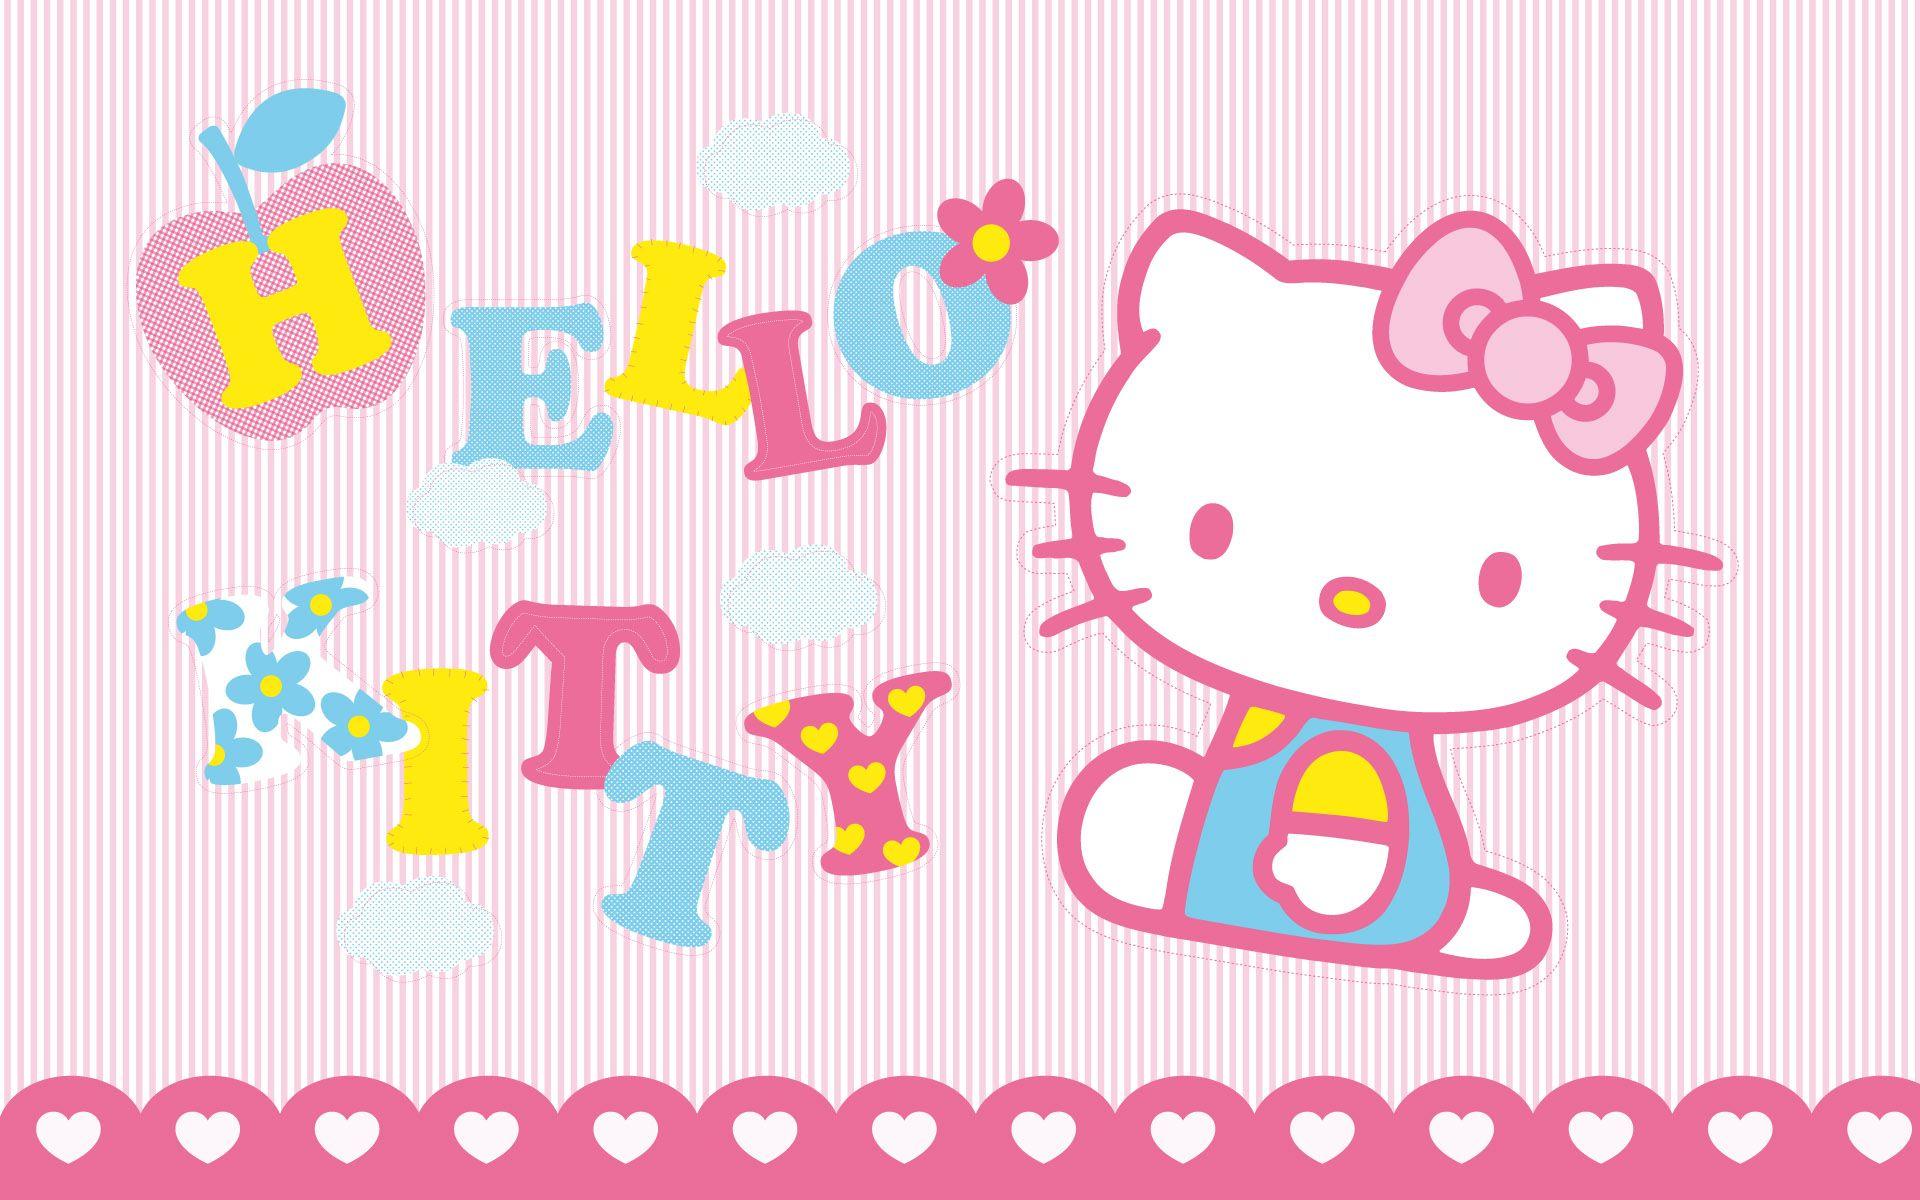 Hello Kitty Desktop Wallpapers Top Free Hello Kitty Desktop Backgrounds Wallpaperaccess